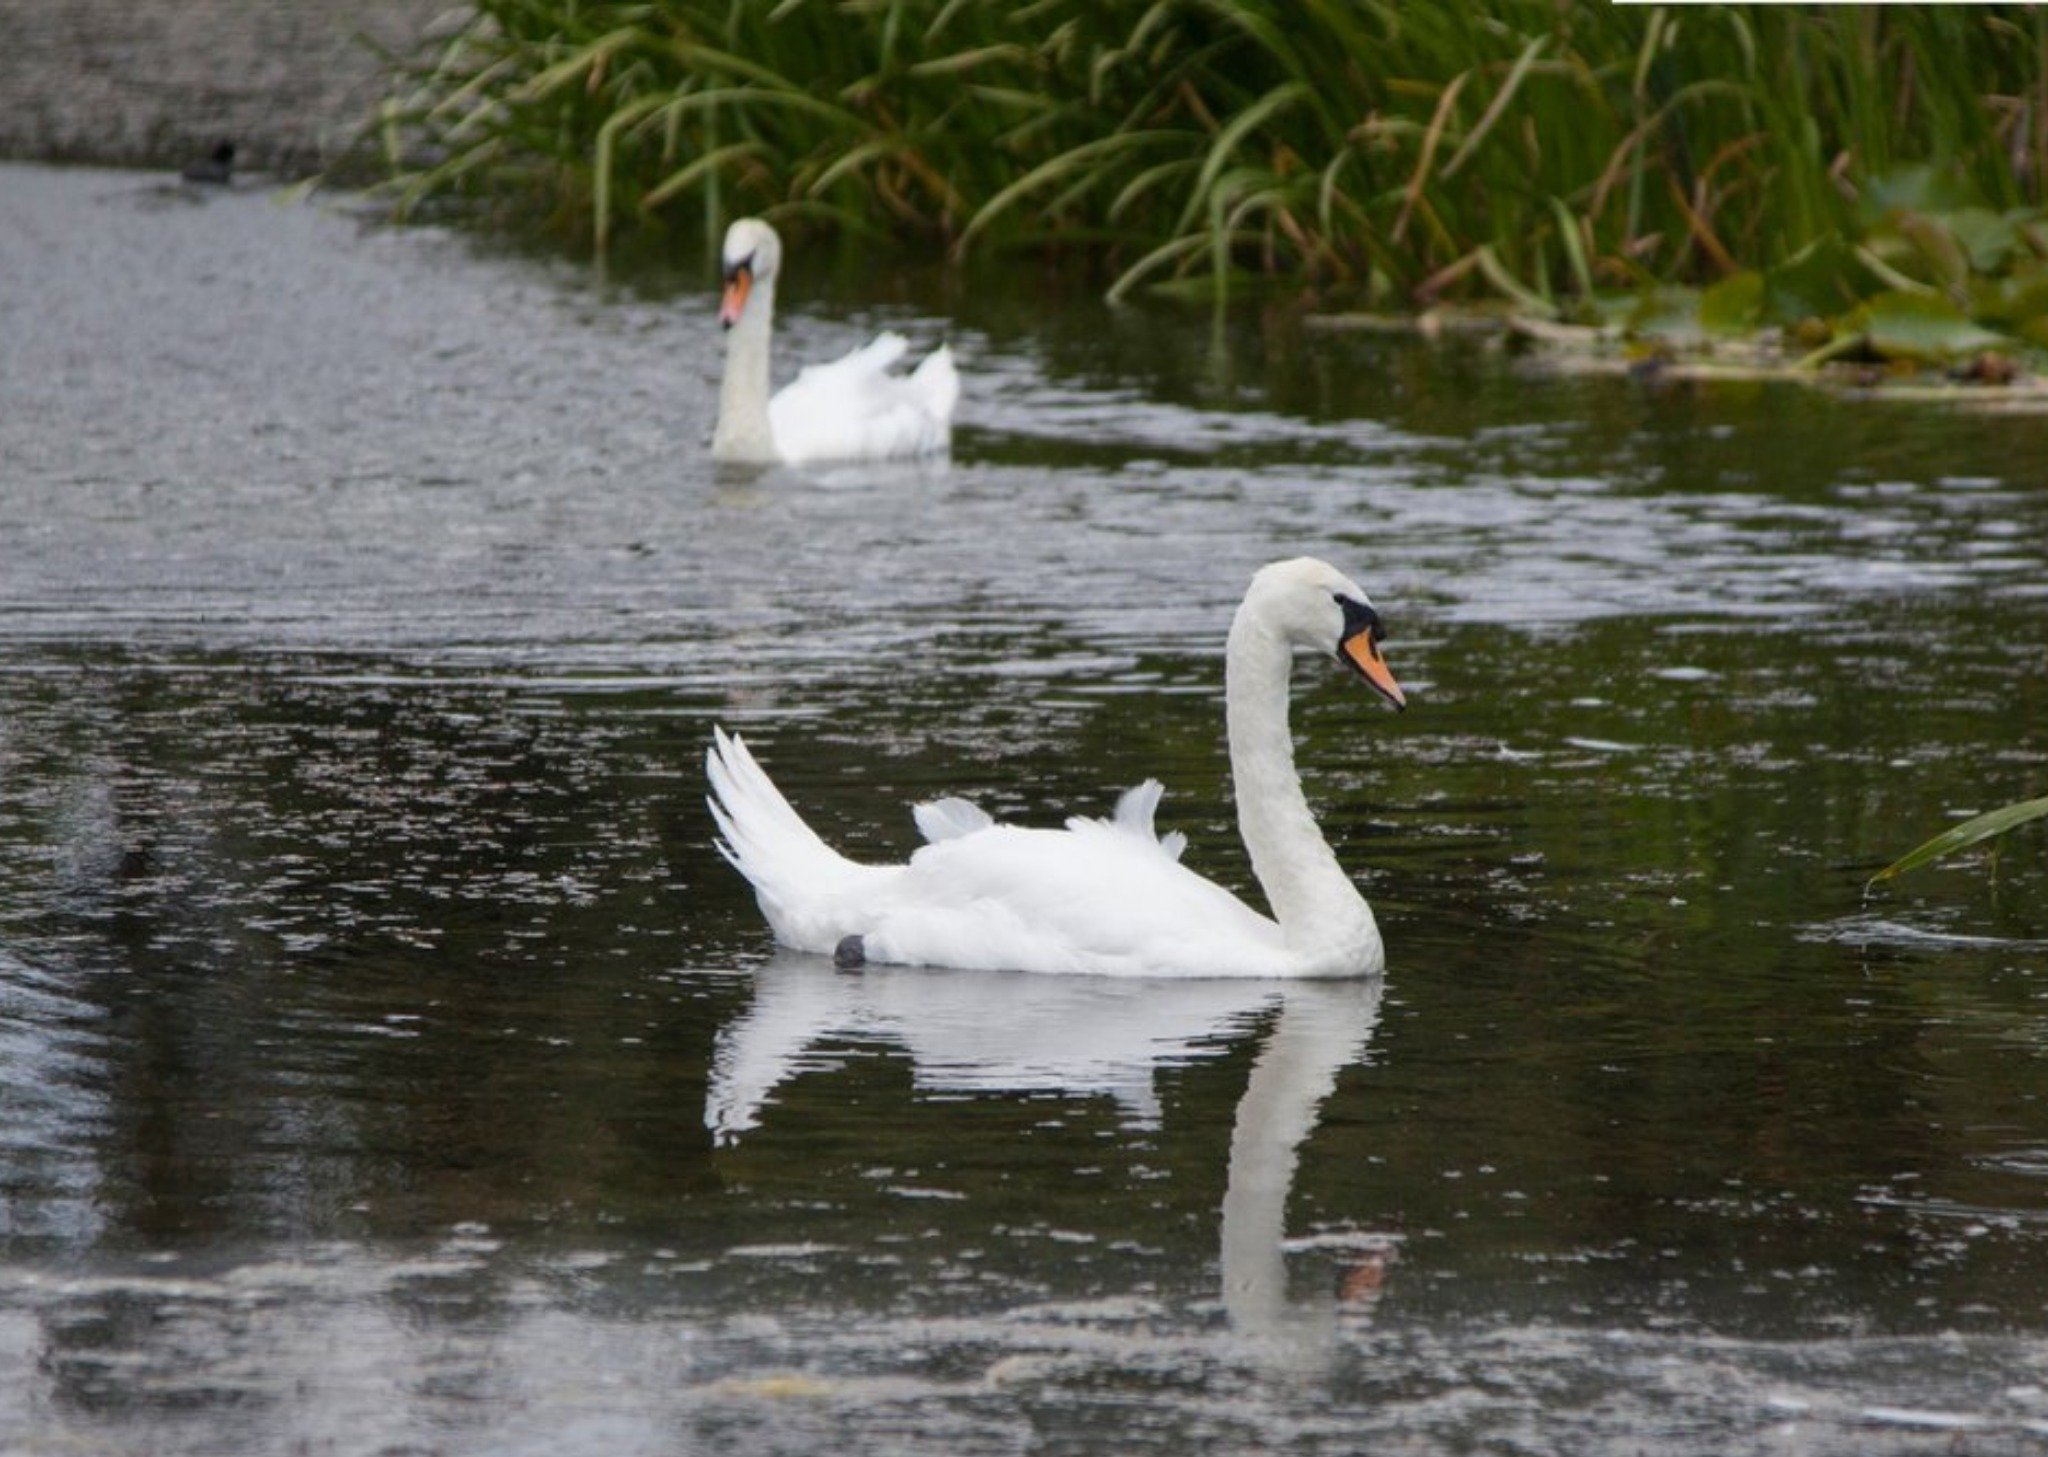 Moonpig Photo Of Swan In Lake Card Ecard